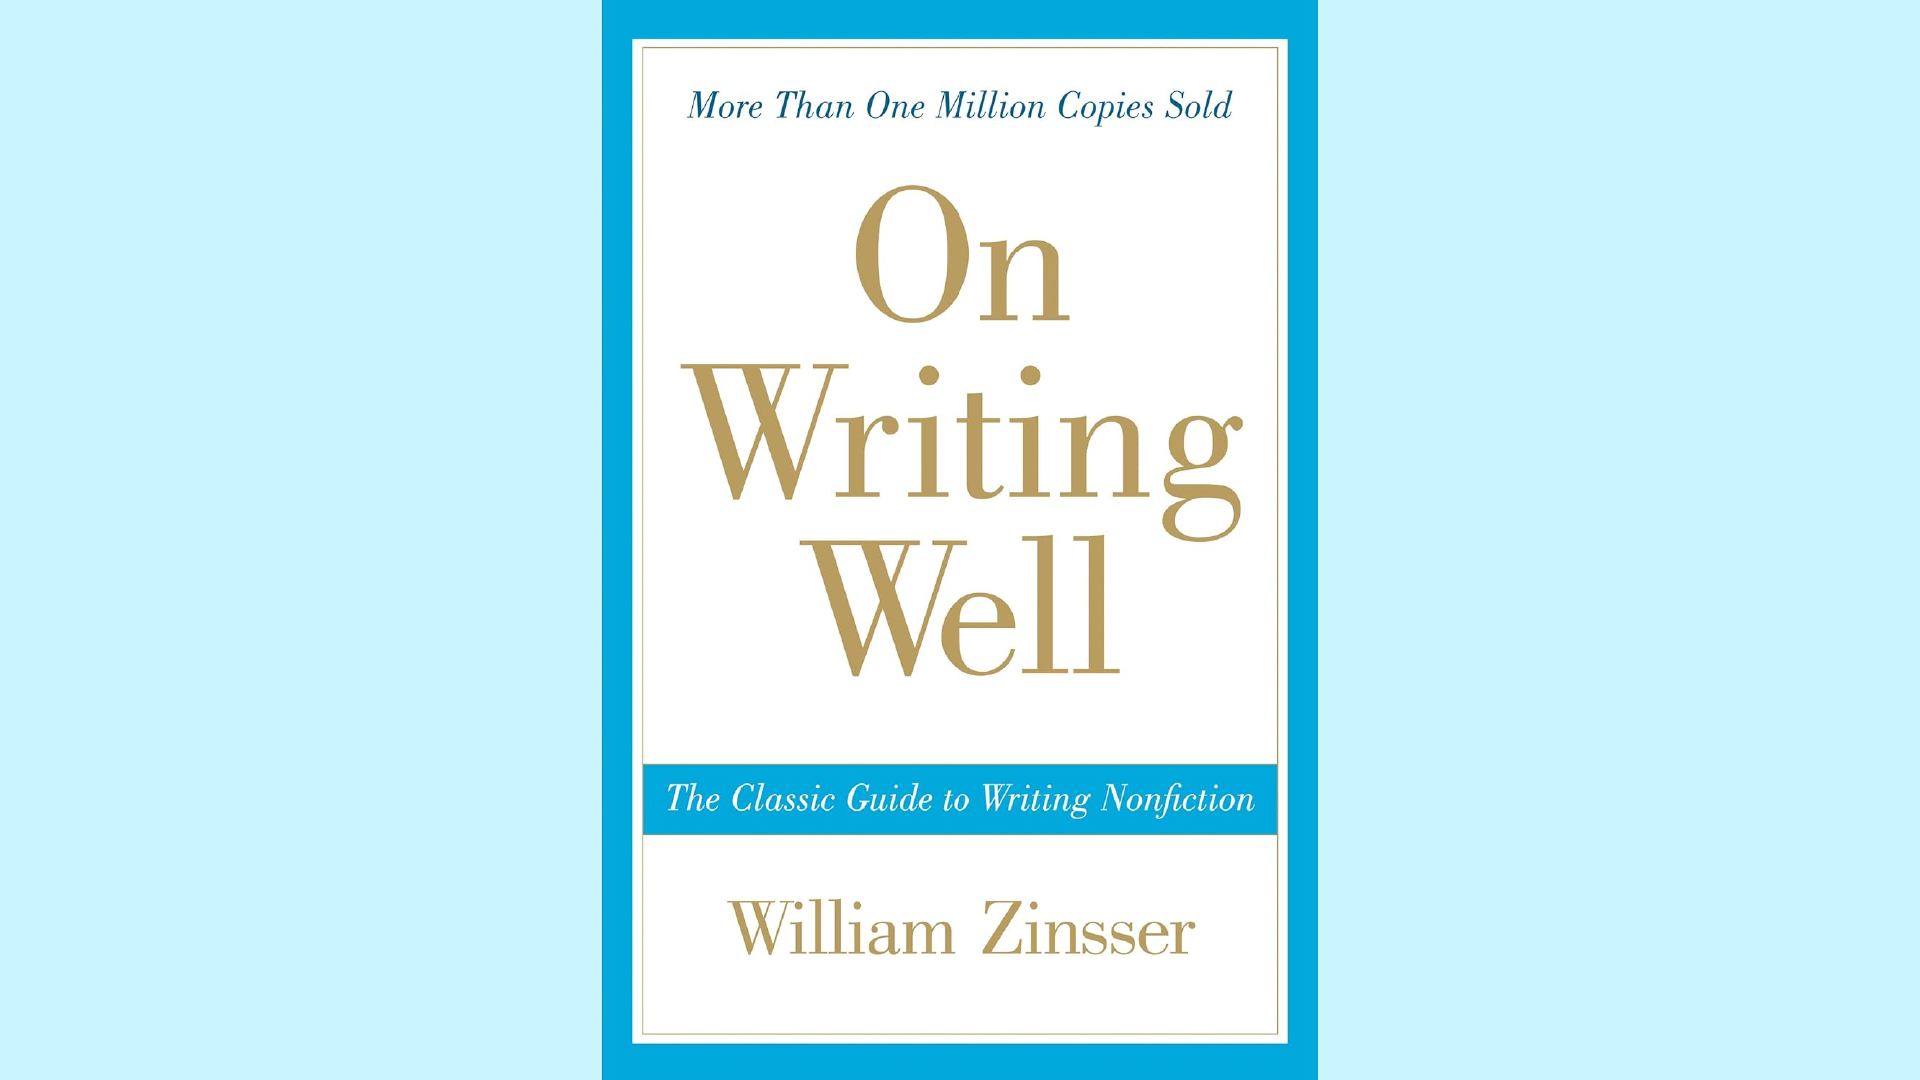 Summary: On Writing Well by William Zinsser